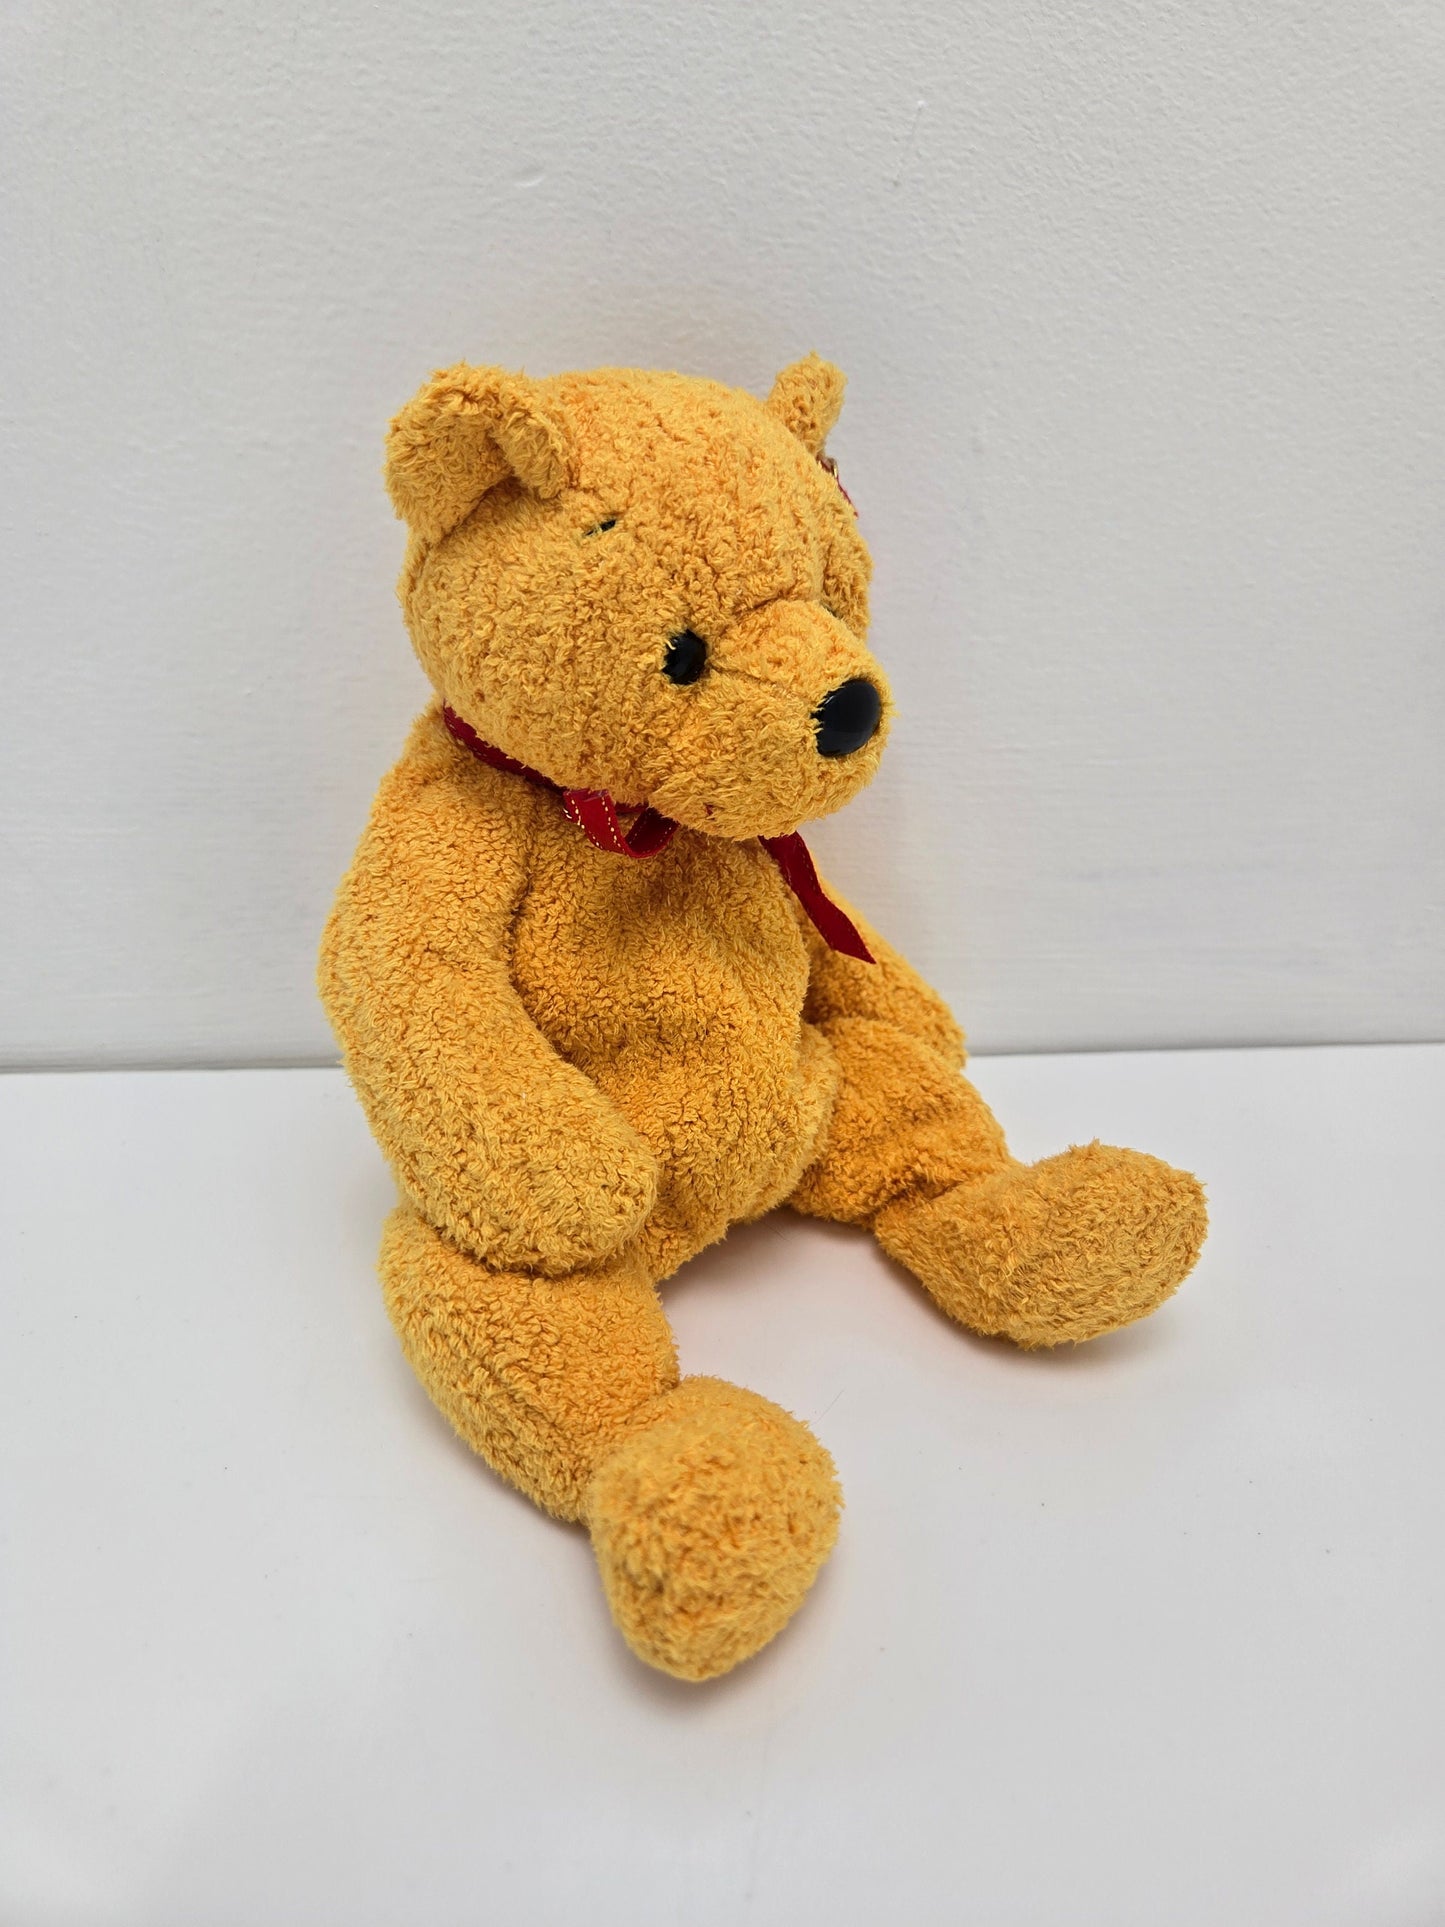 Ty Beanie Baby “Poopsie” the Yellow Bear (8 inch)